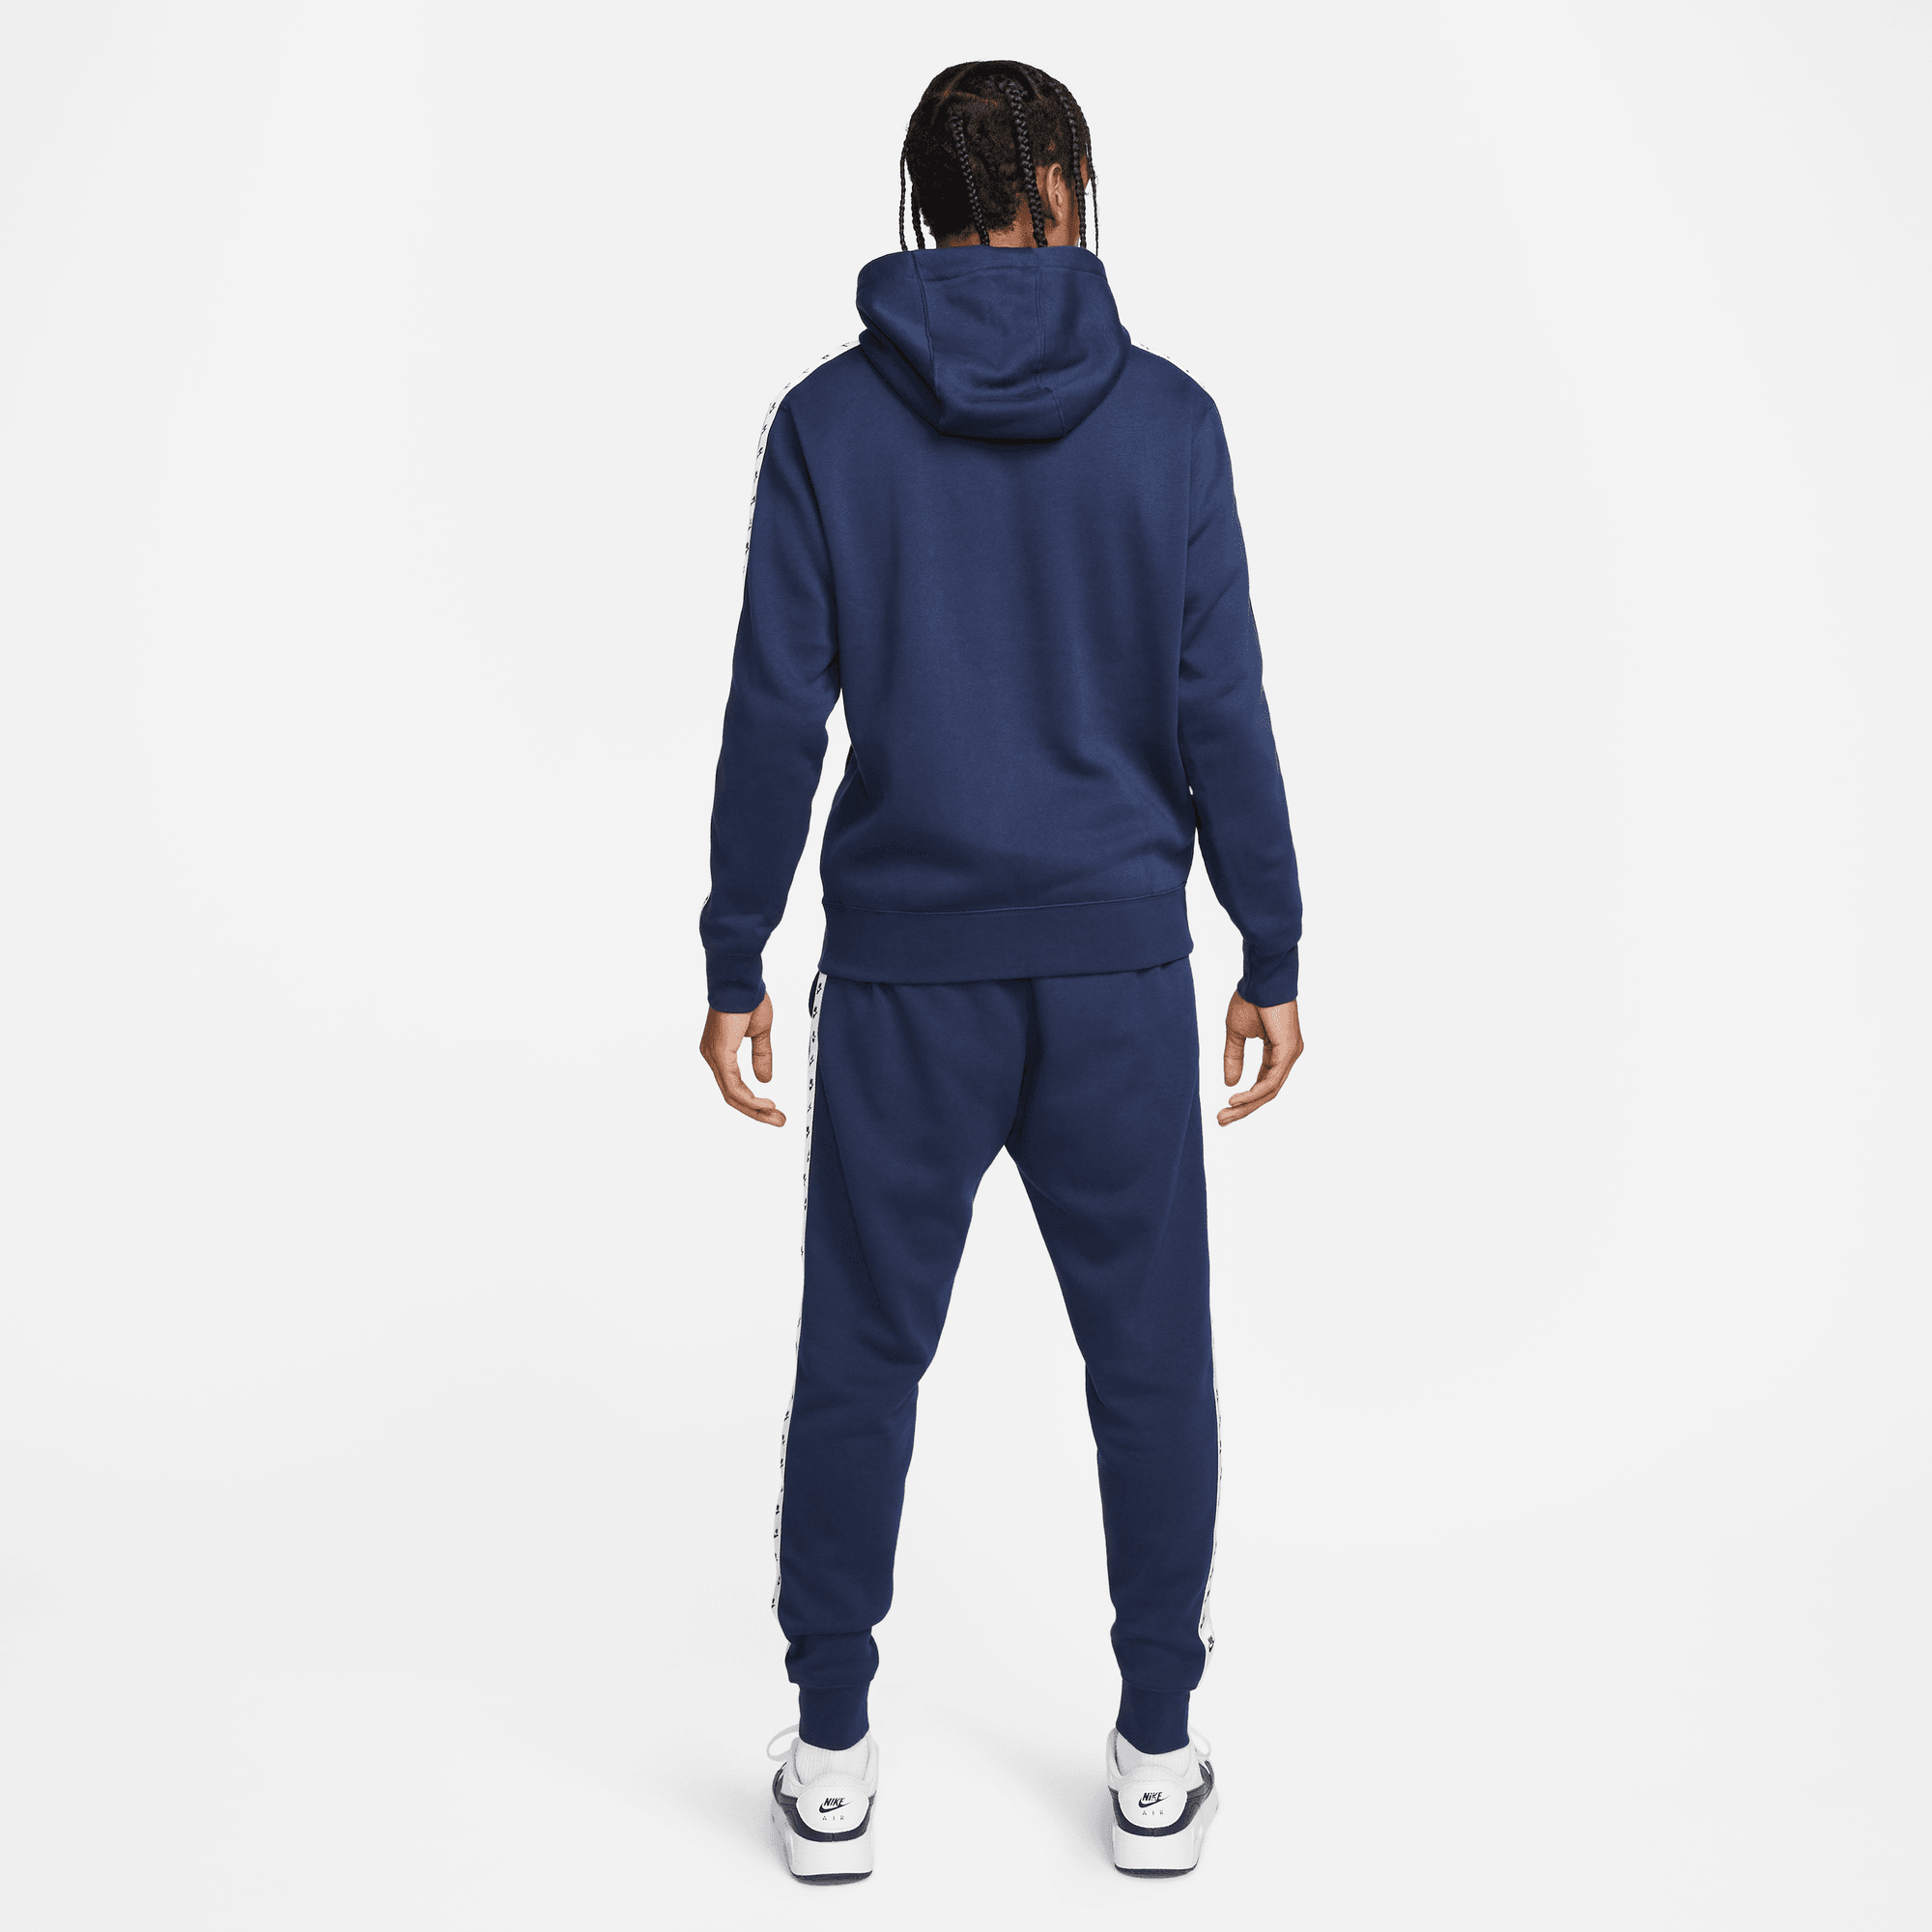 Survêtement Nike Sportswear Essential  - Bleu